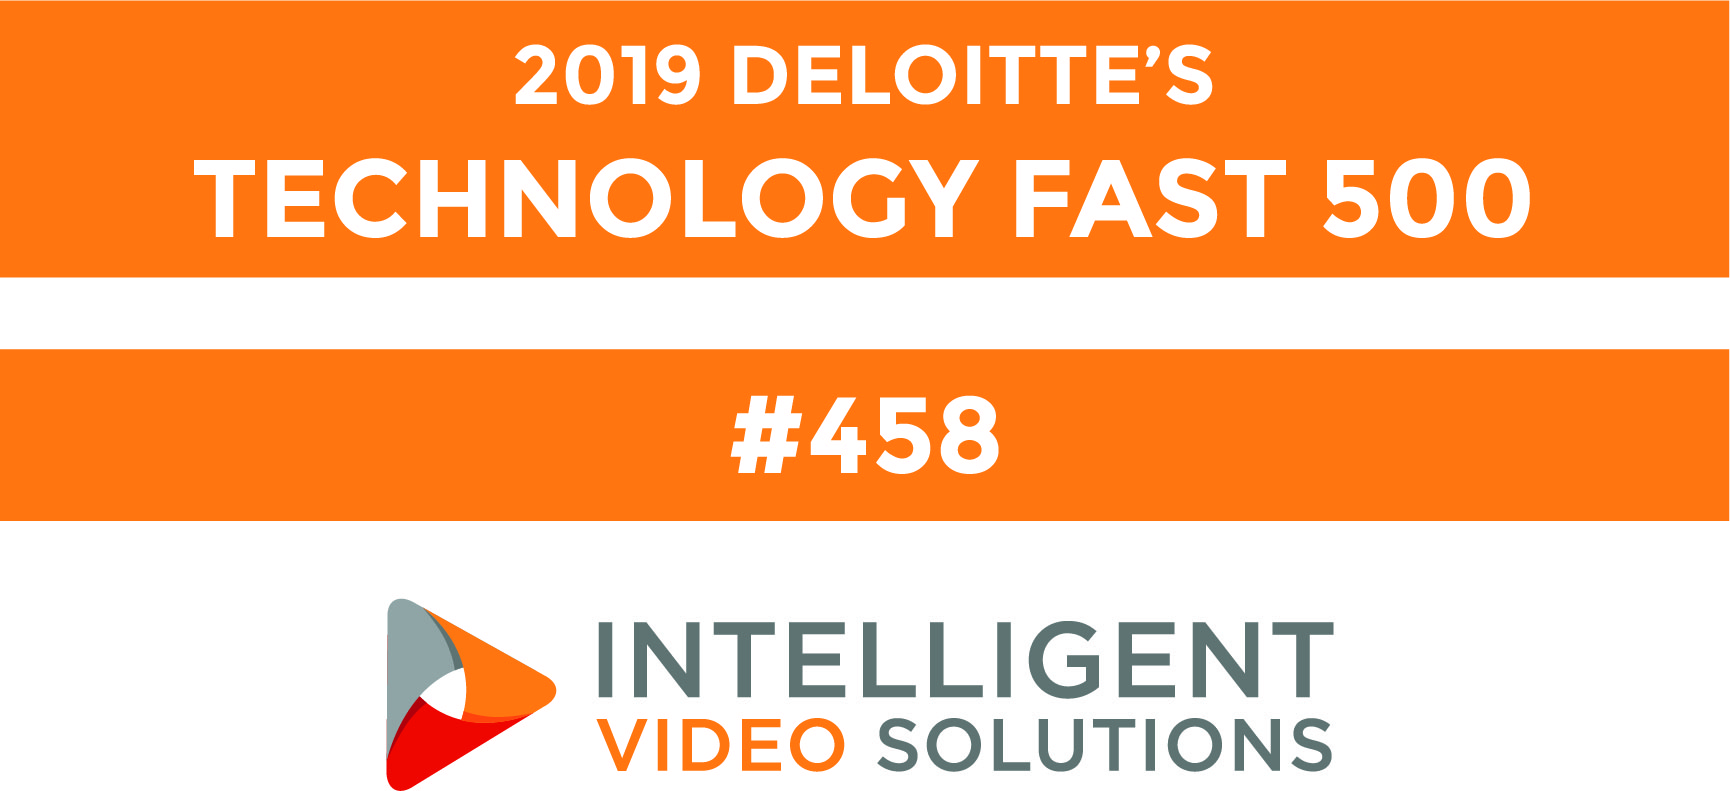 IVS Recognized as Deloitte’s Technology Fast 500 Winner